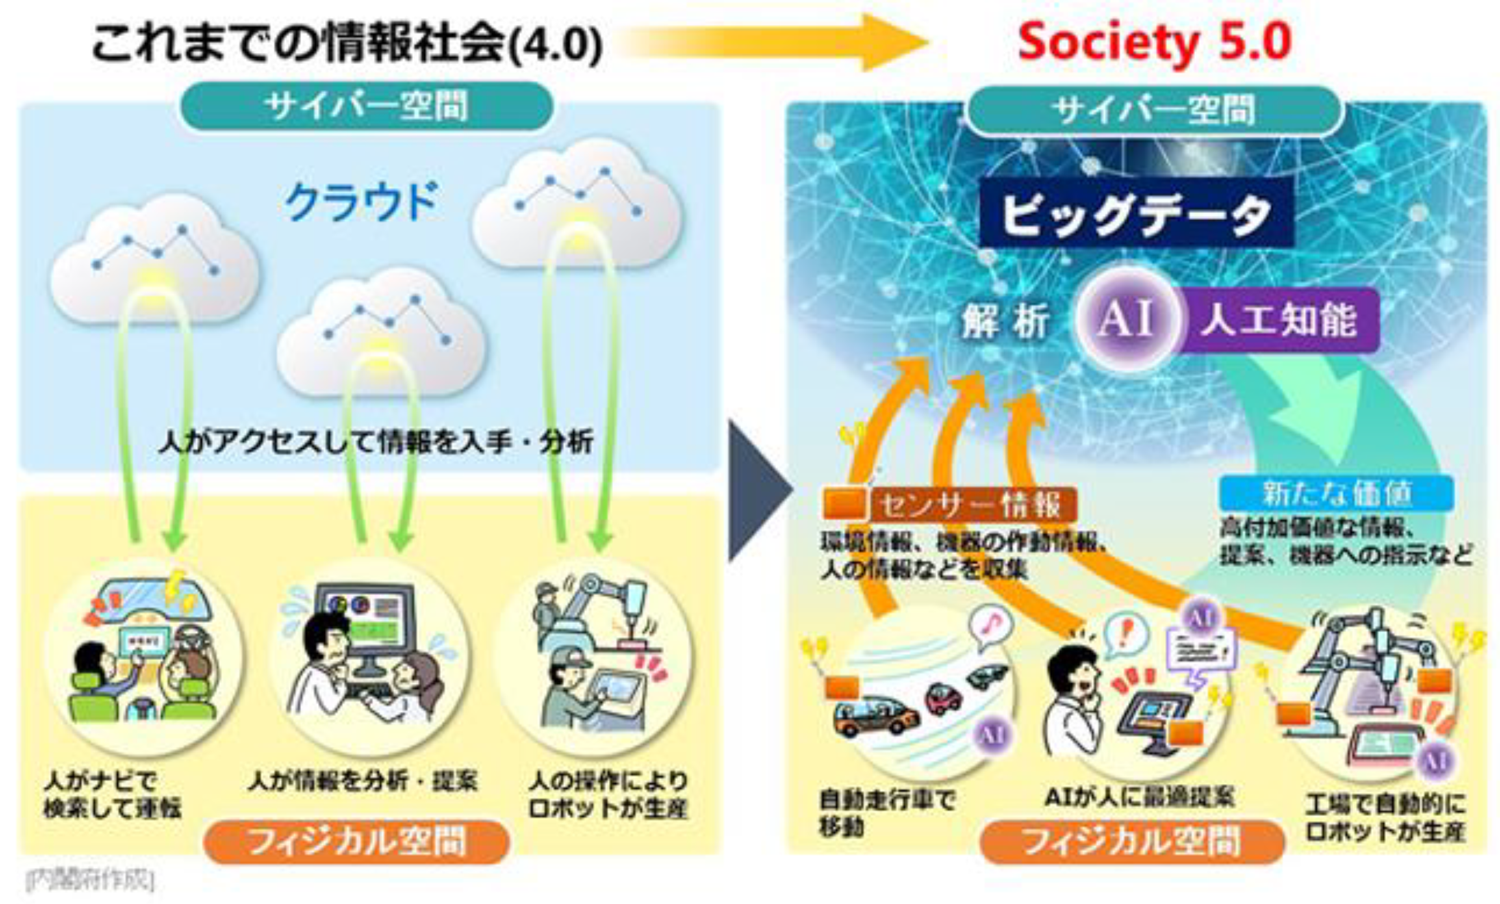 Society4.0からSociety 5.0への変革（内閣府）